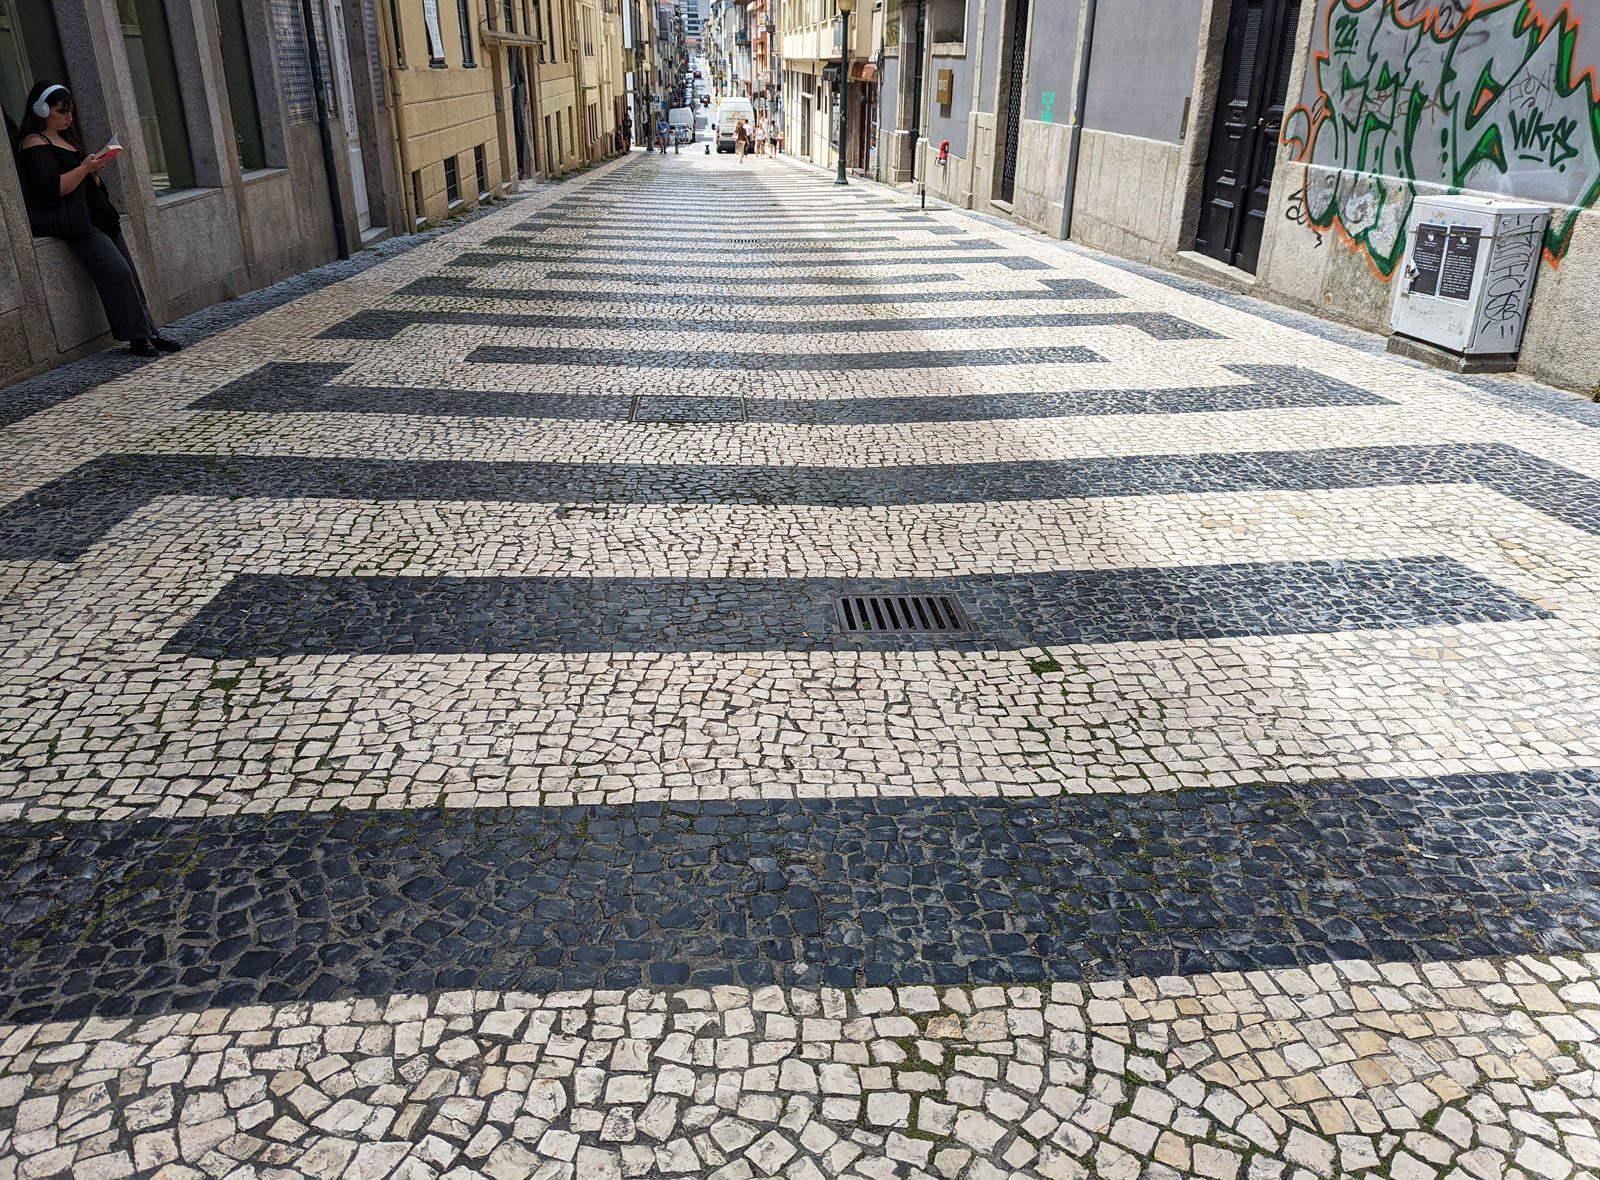 Rua de Miguel Bombarda paving | Portugal Travel Guide Photos